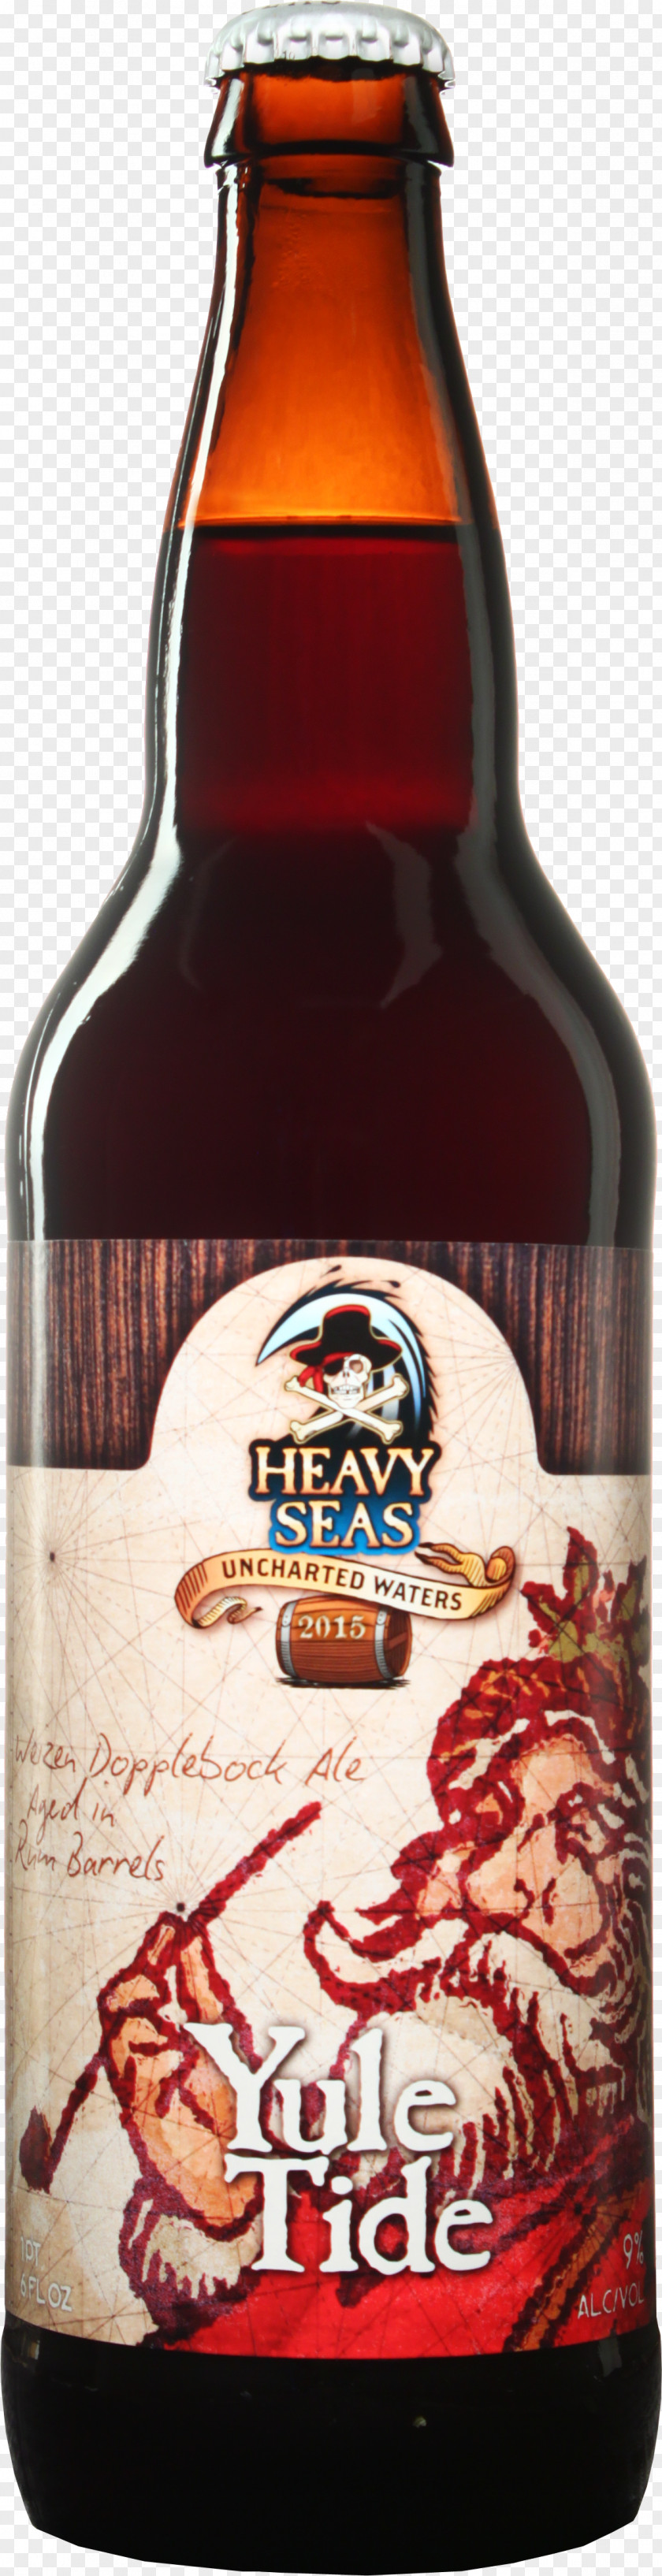 Beer Ale Heavy Seas Stout Bottle PNG